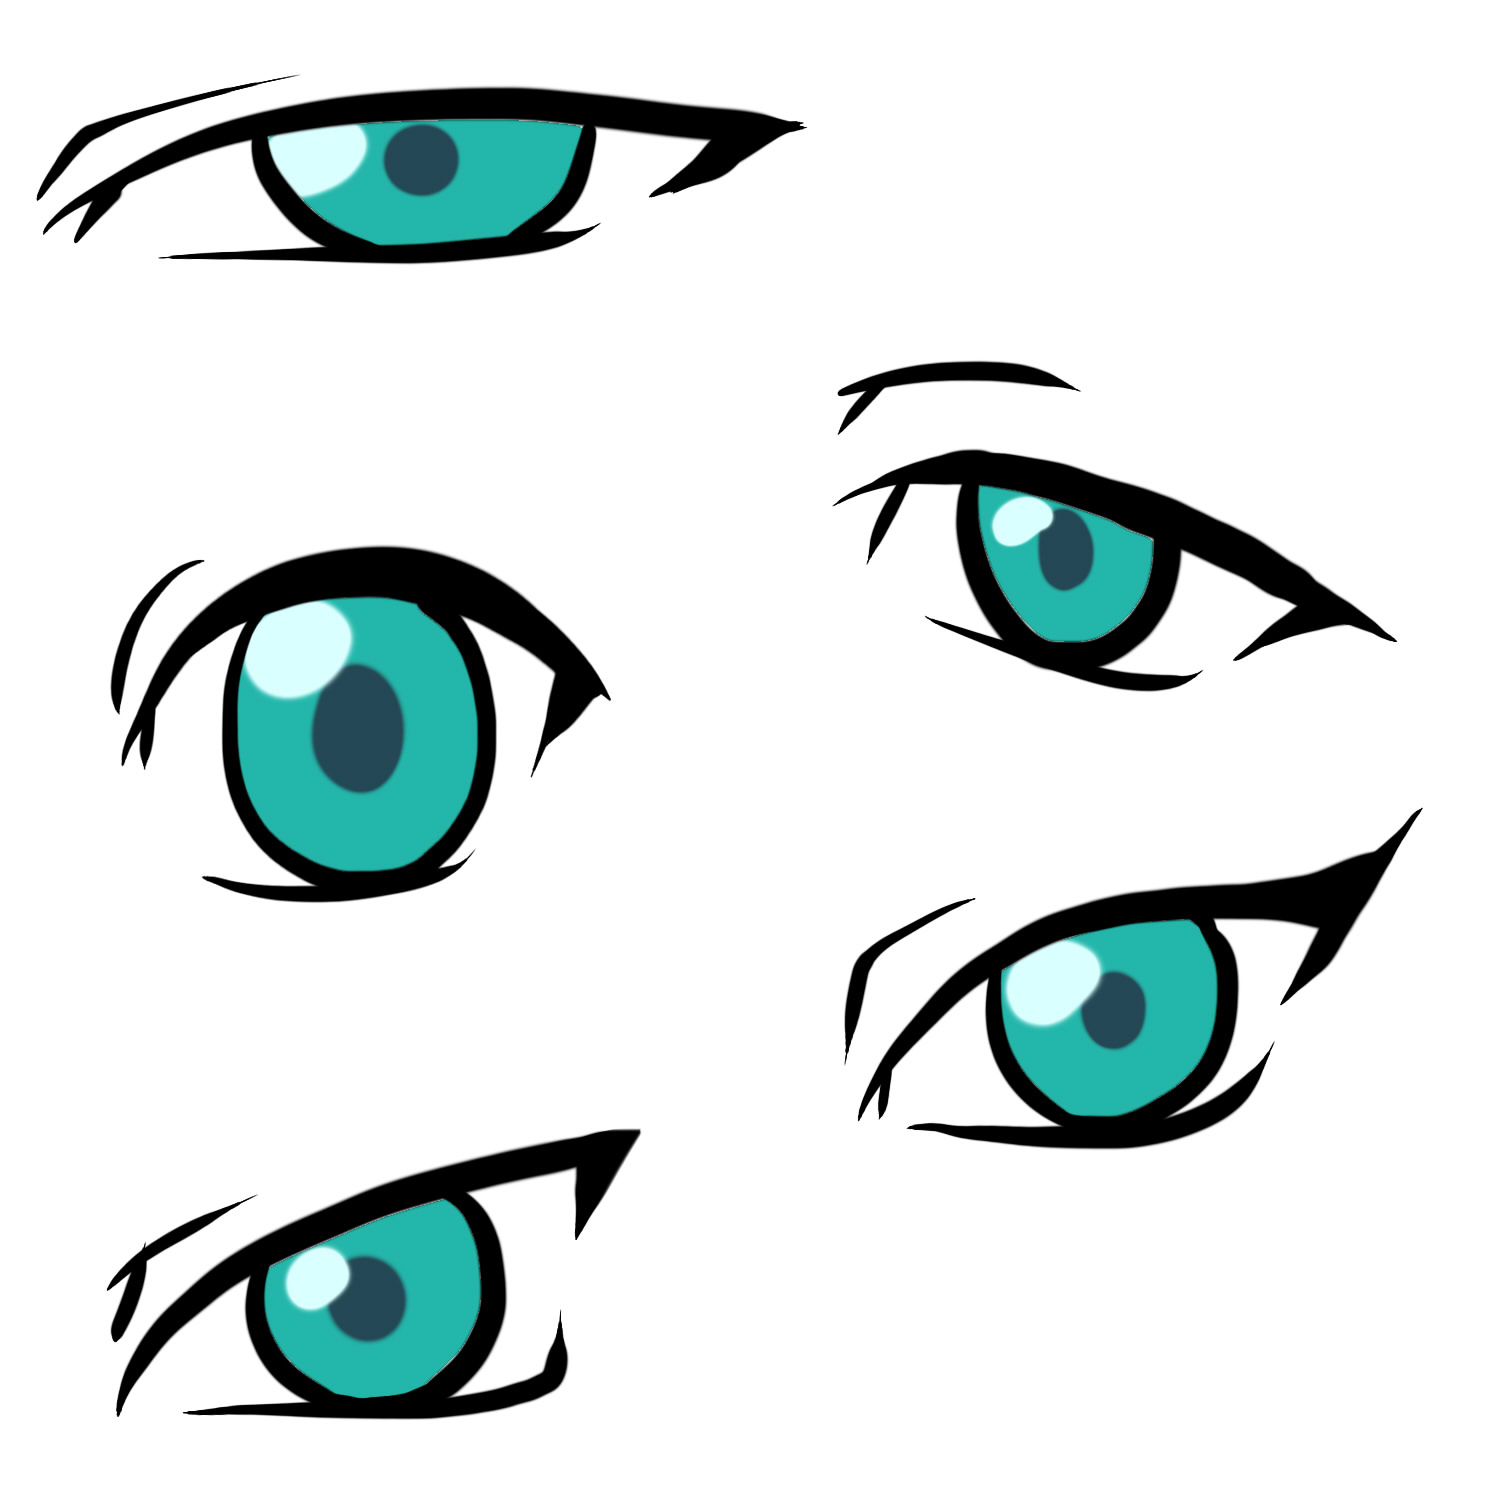 How to Draw a Manga Eye Man  StepbyStep Pictures  How 2 Draw Manga